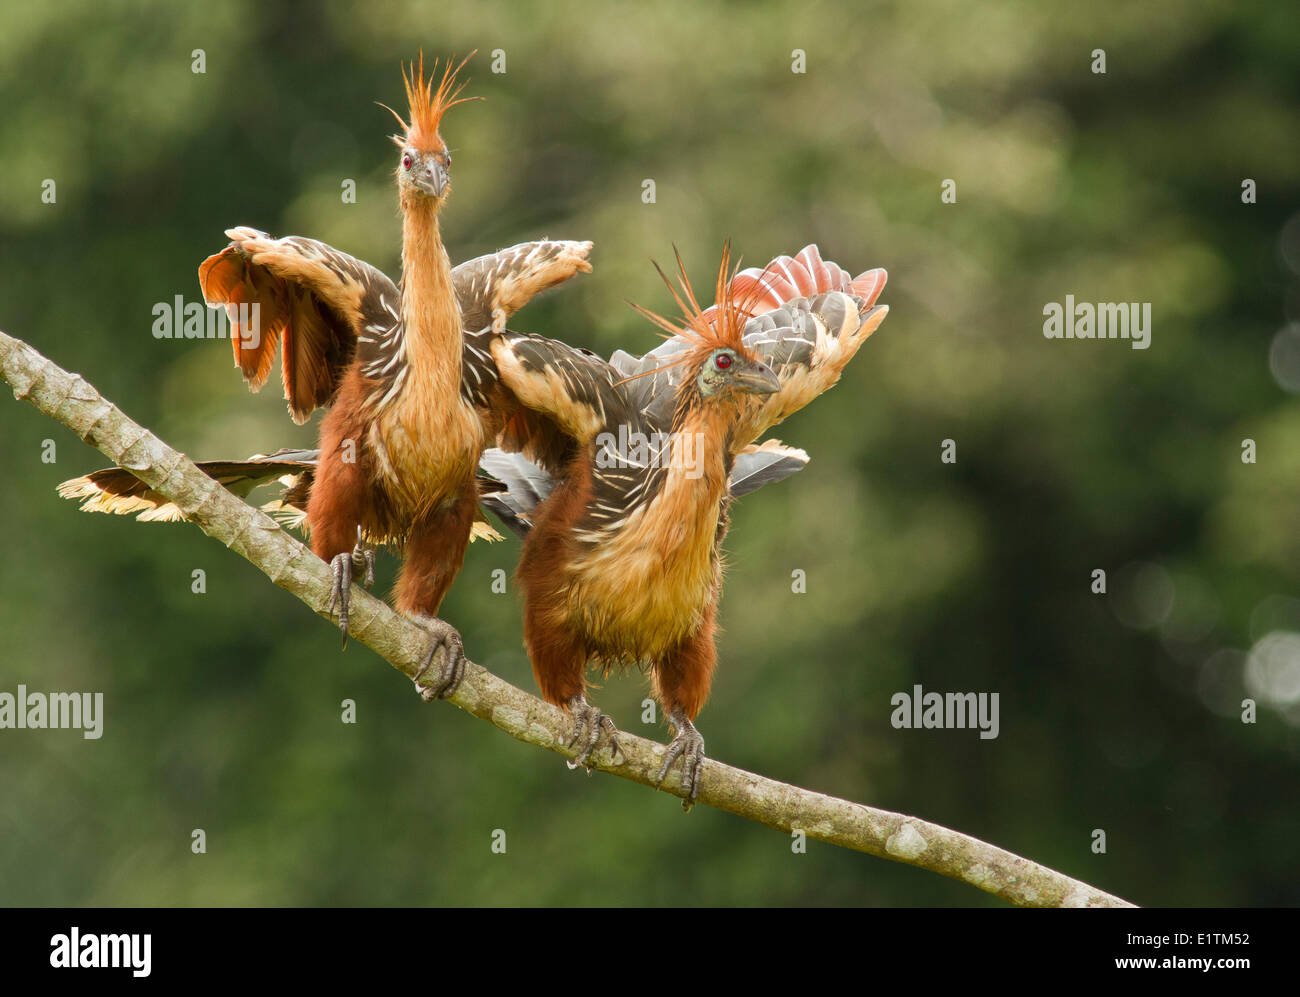 Amazon animal fotografías e imágenes de alta resolución - Alamy